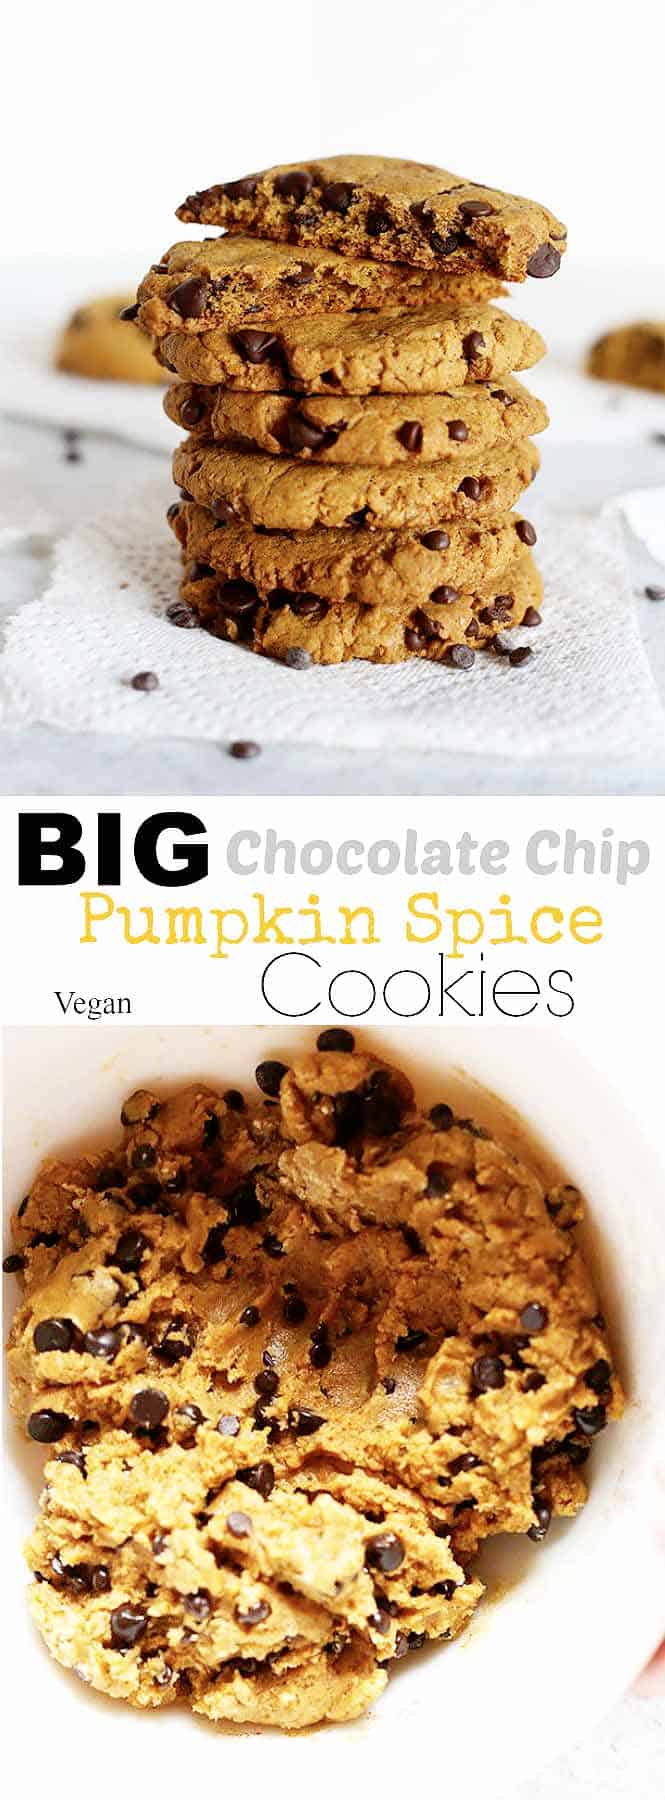 Big Chocolate Chip Pumpkin Spice Cookies